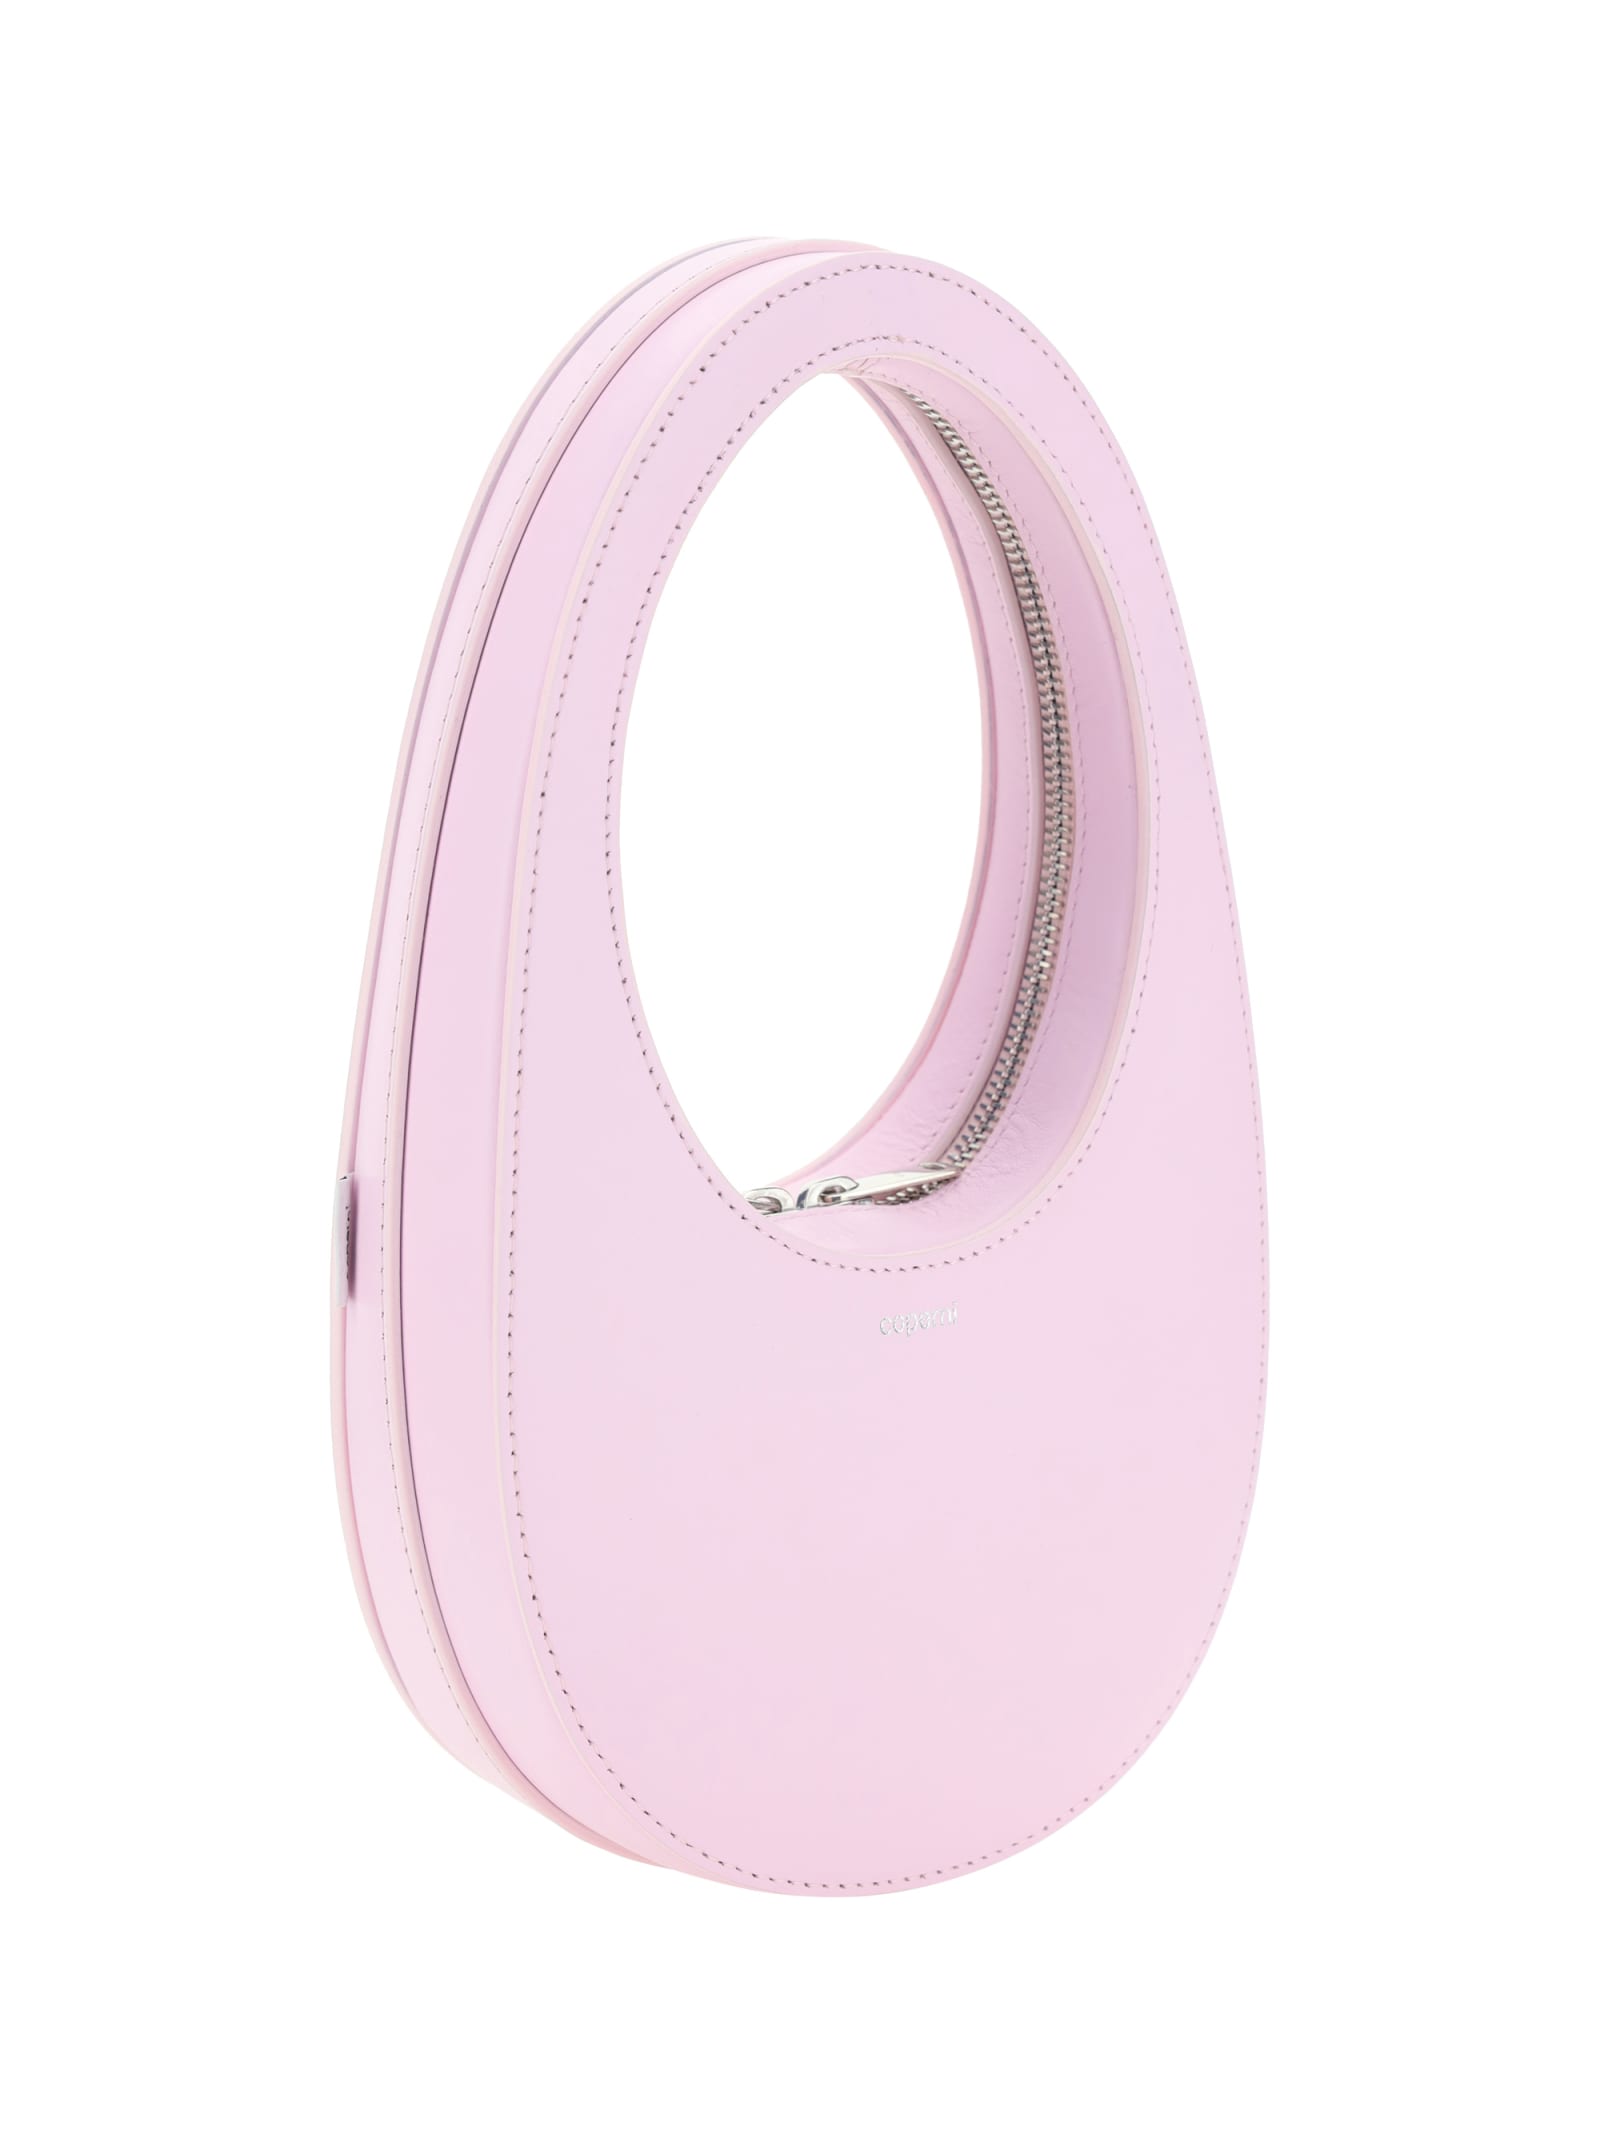 Shop Coperni Mini Swipe Bag In Light Pink